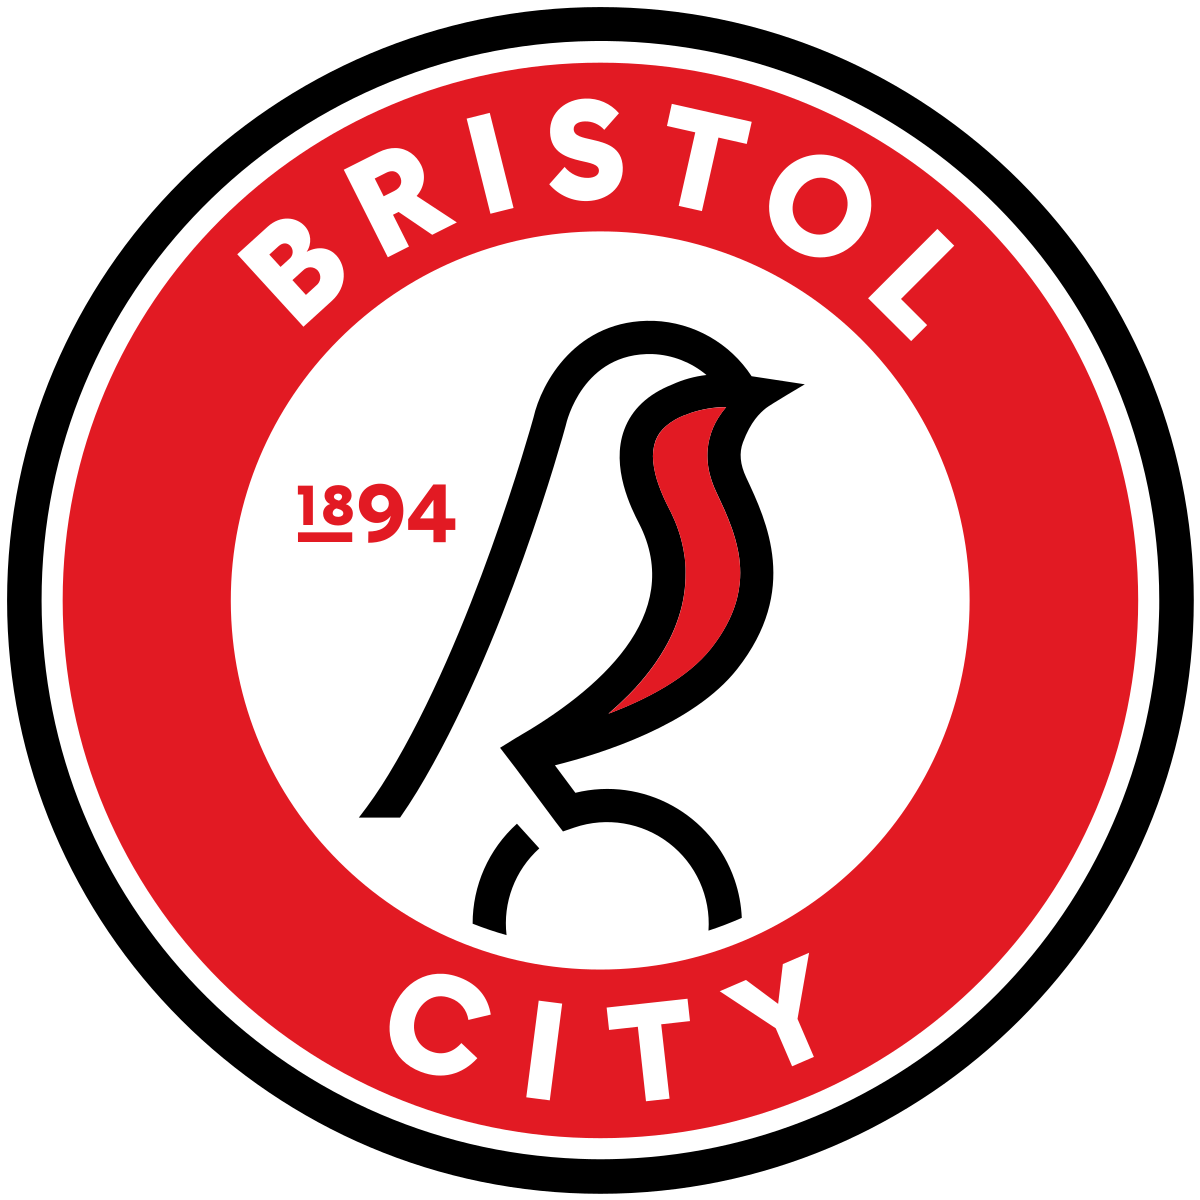 Bristol City v Cardiff City - Hospitality